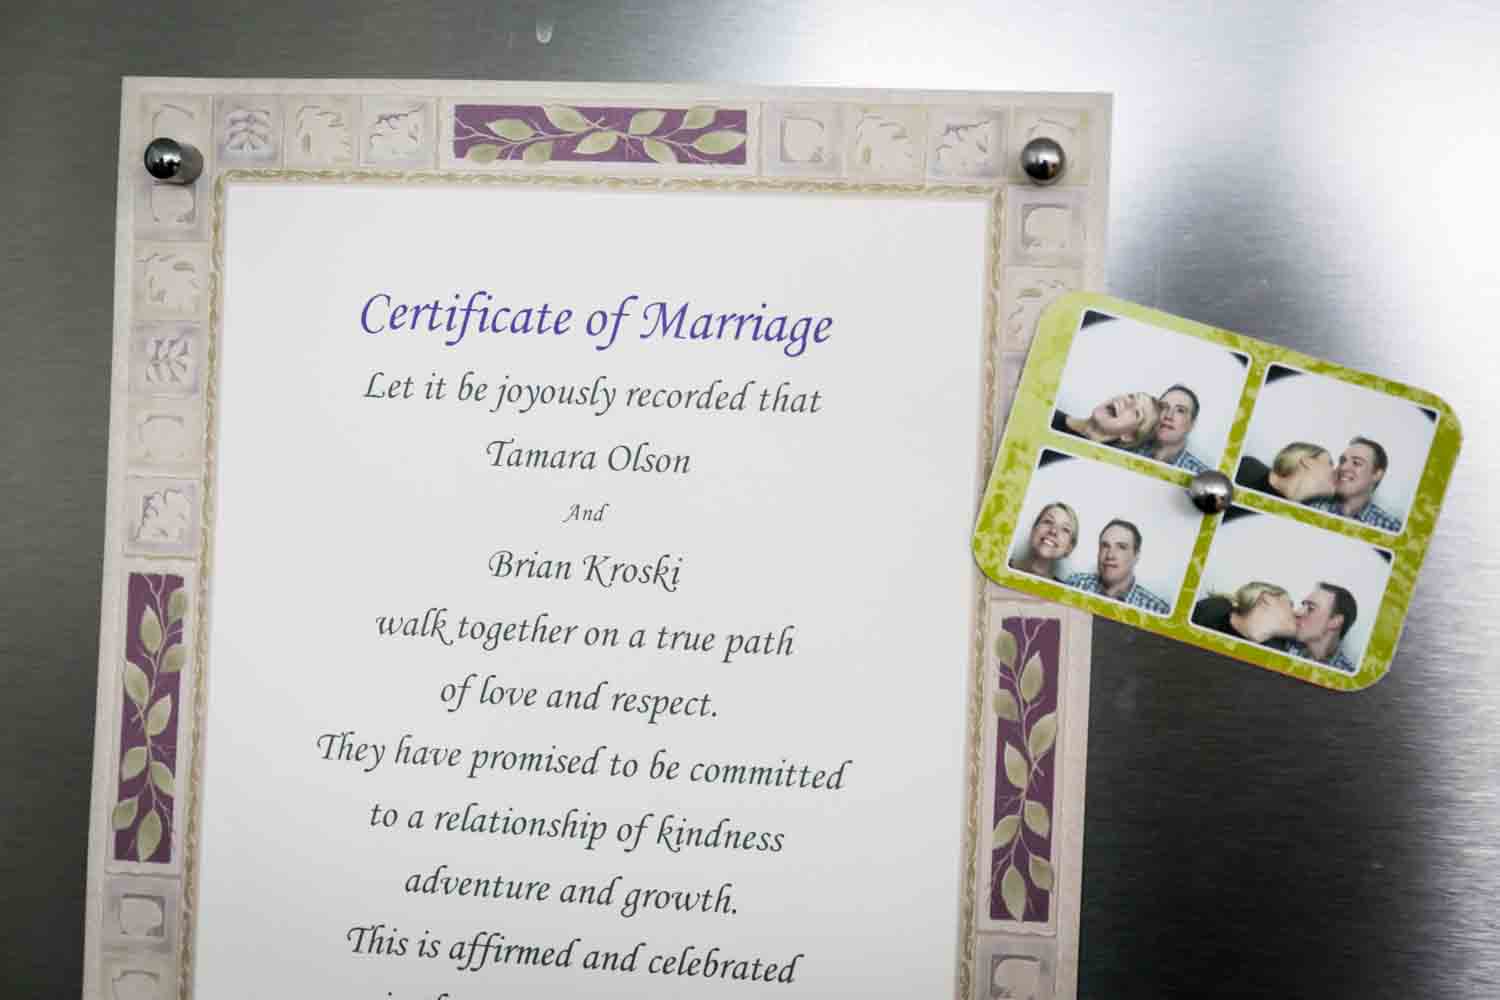 Wedding invitation sign on refrigerator next to photobooth photos of bride and groom